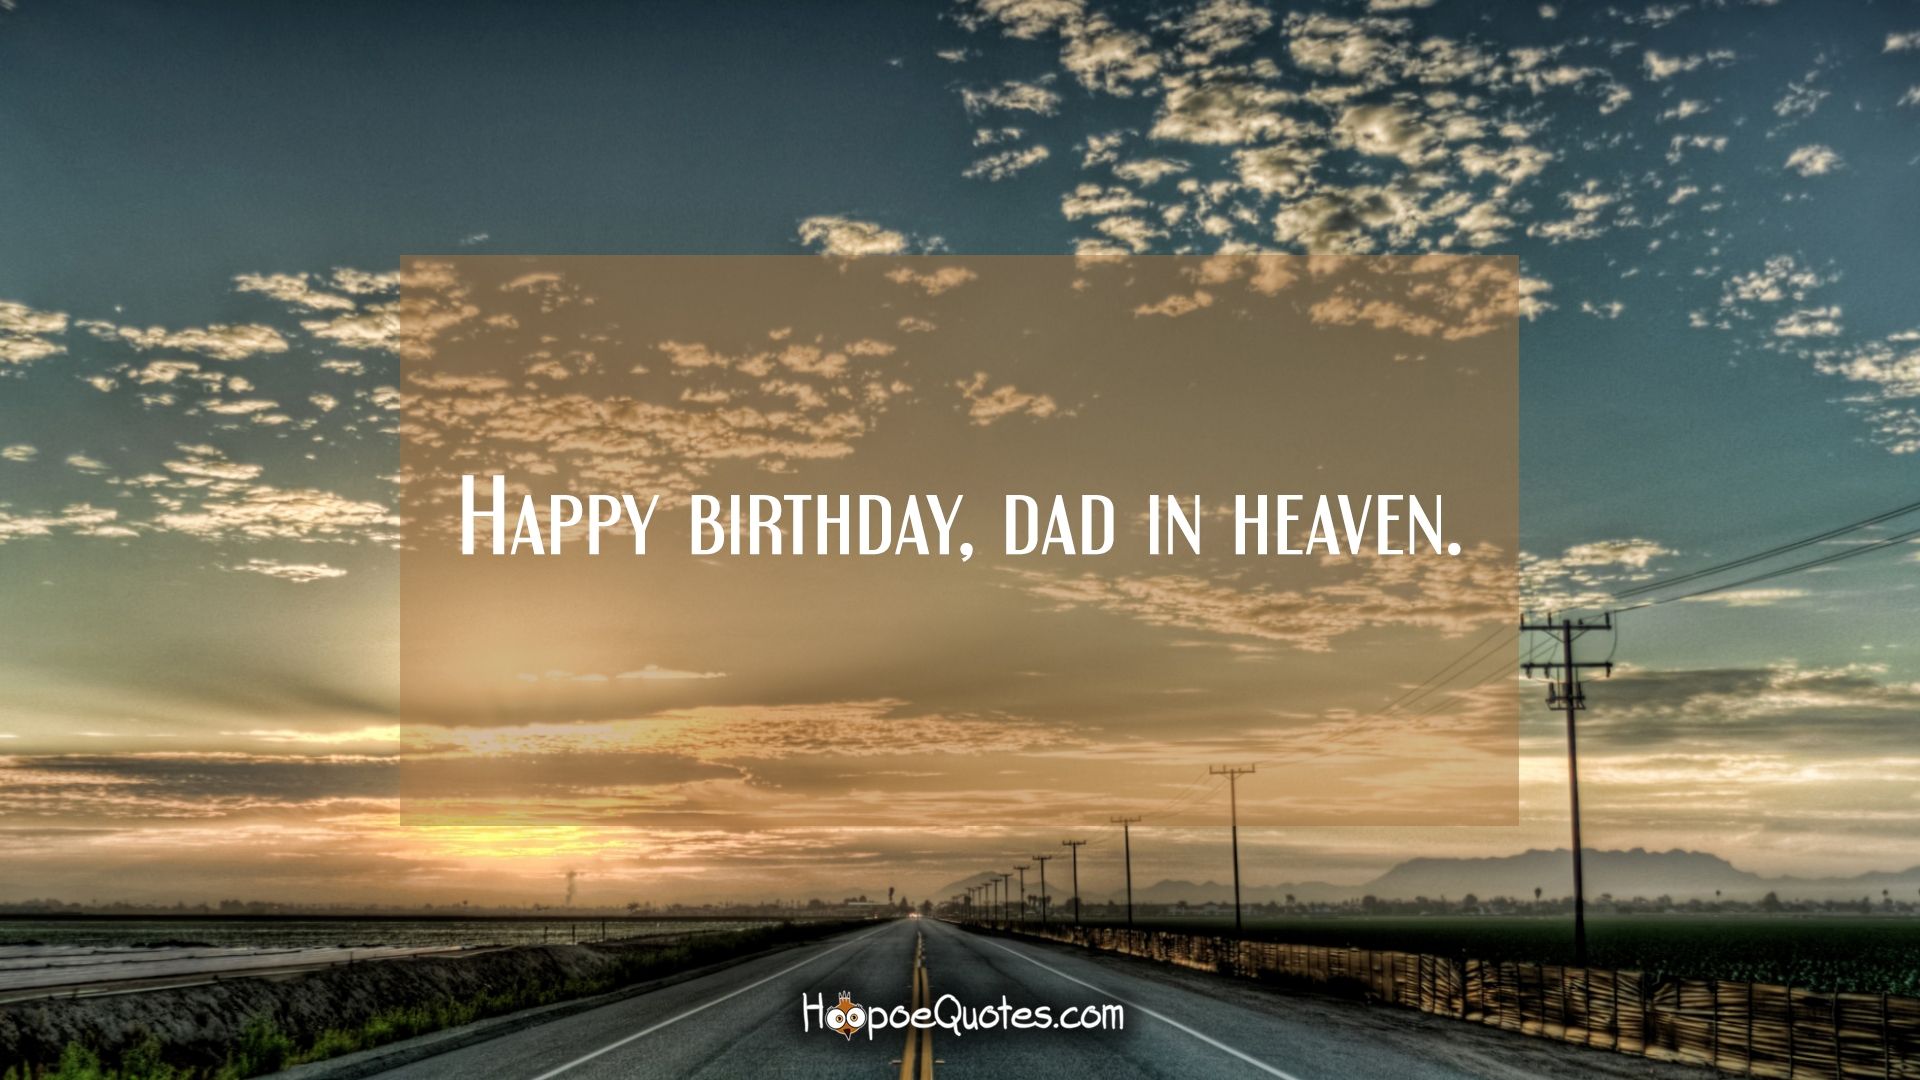 Happy birthday, dad in heaven